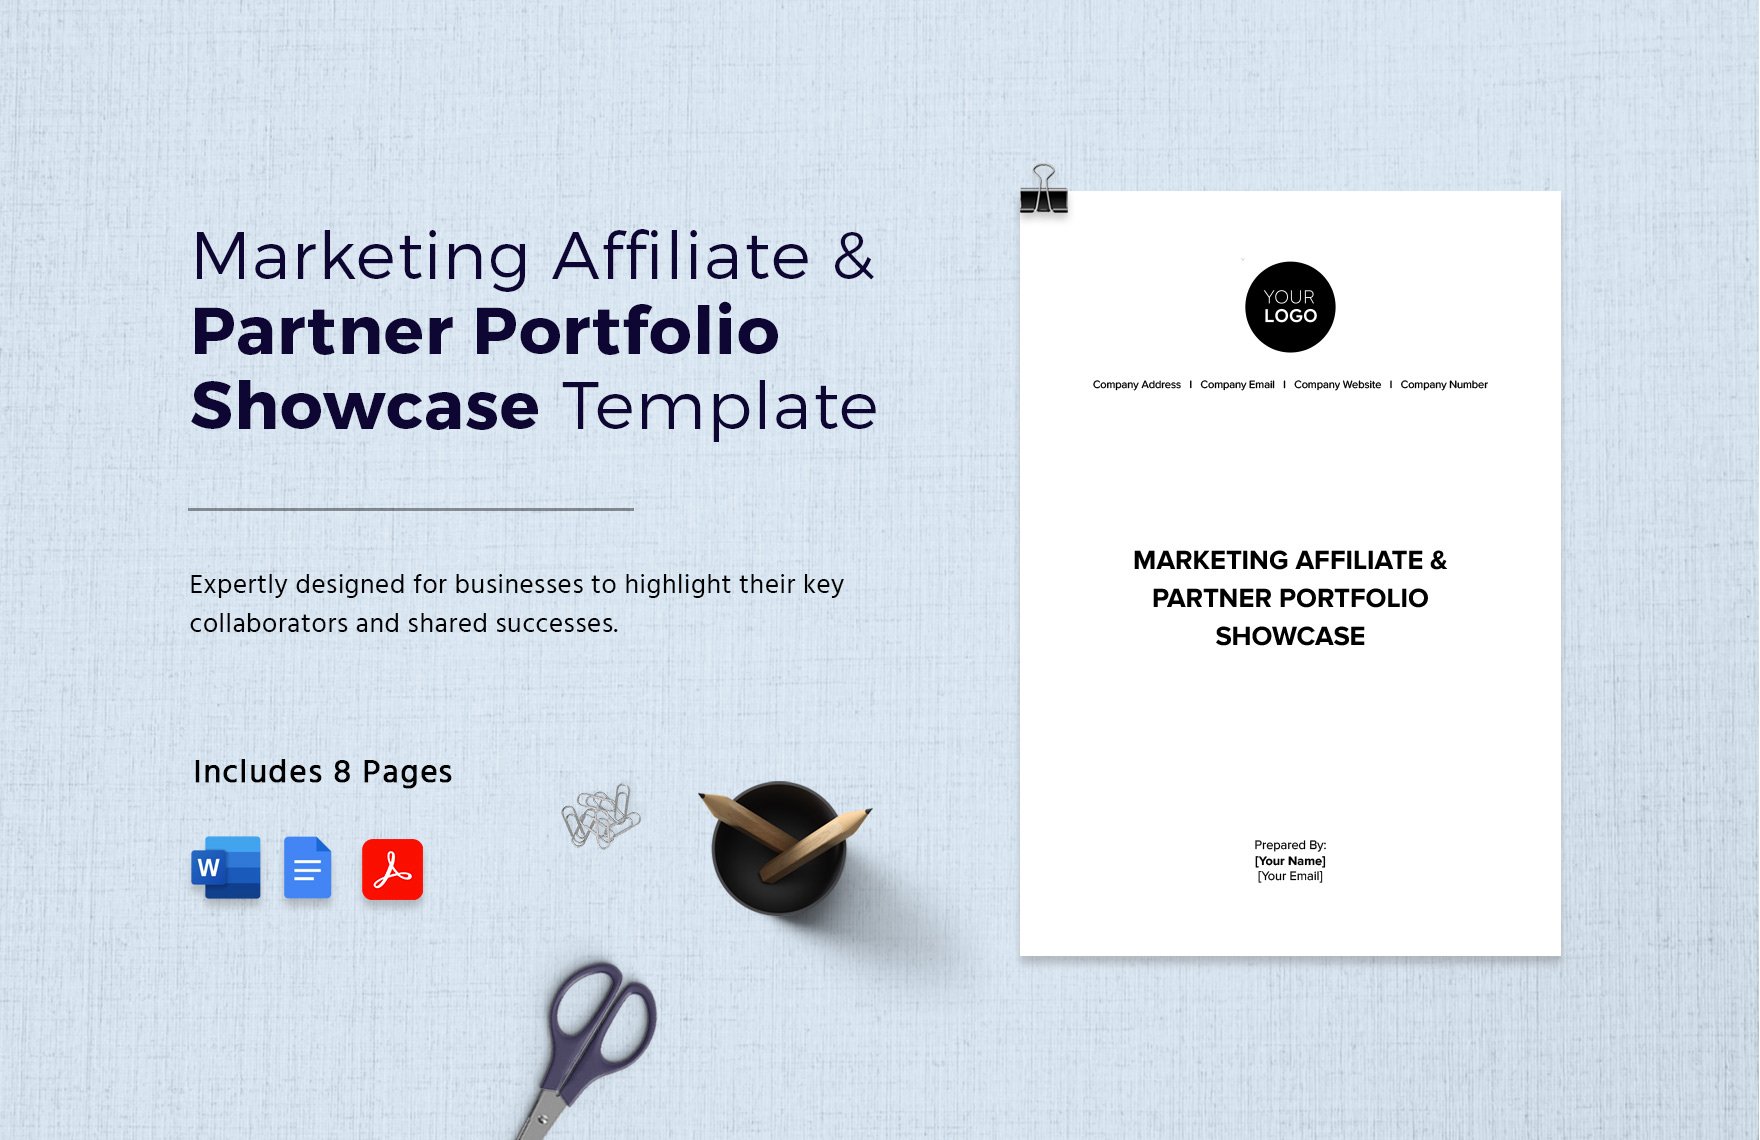 Marketing Affiliate & Partner Portfolio Showcase Template in Word, Google Docs, PDF